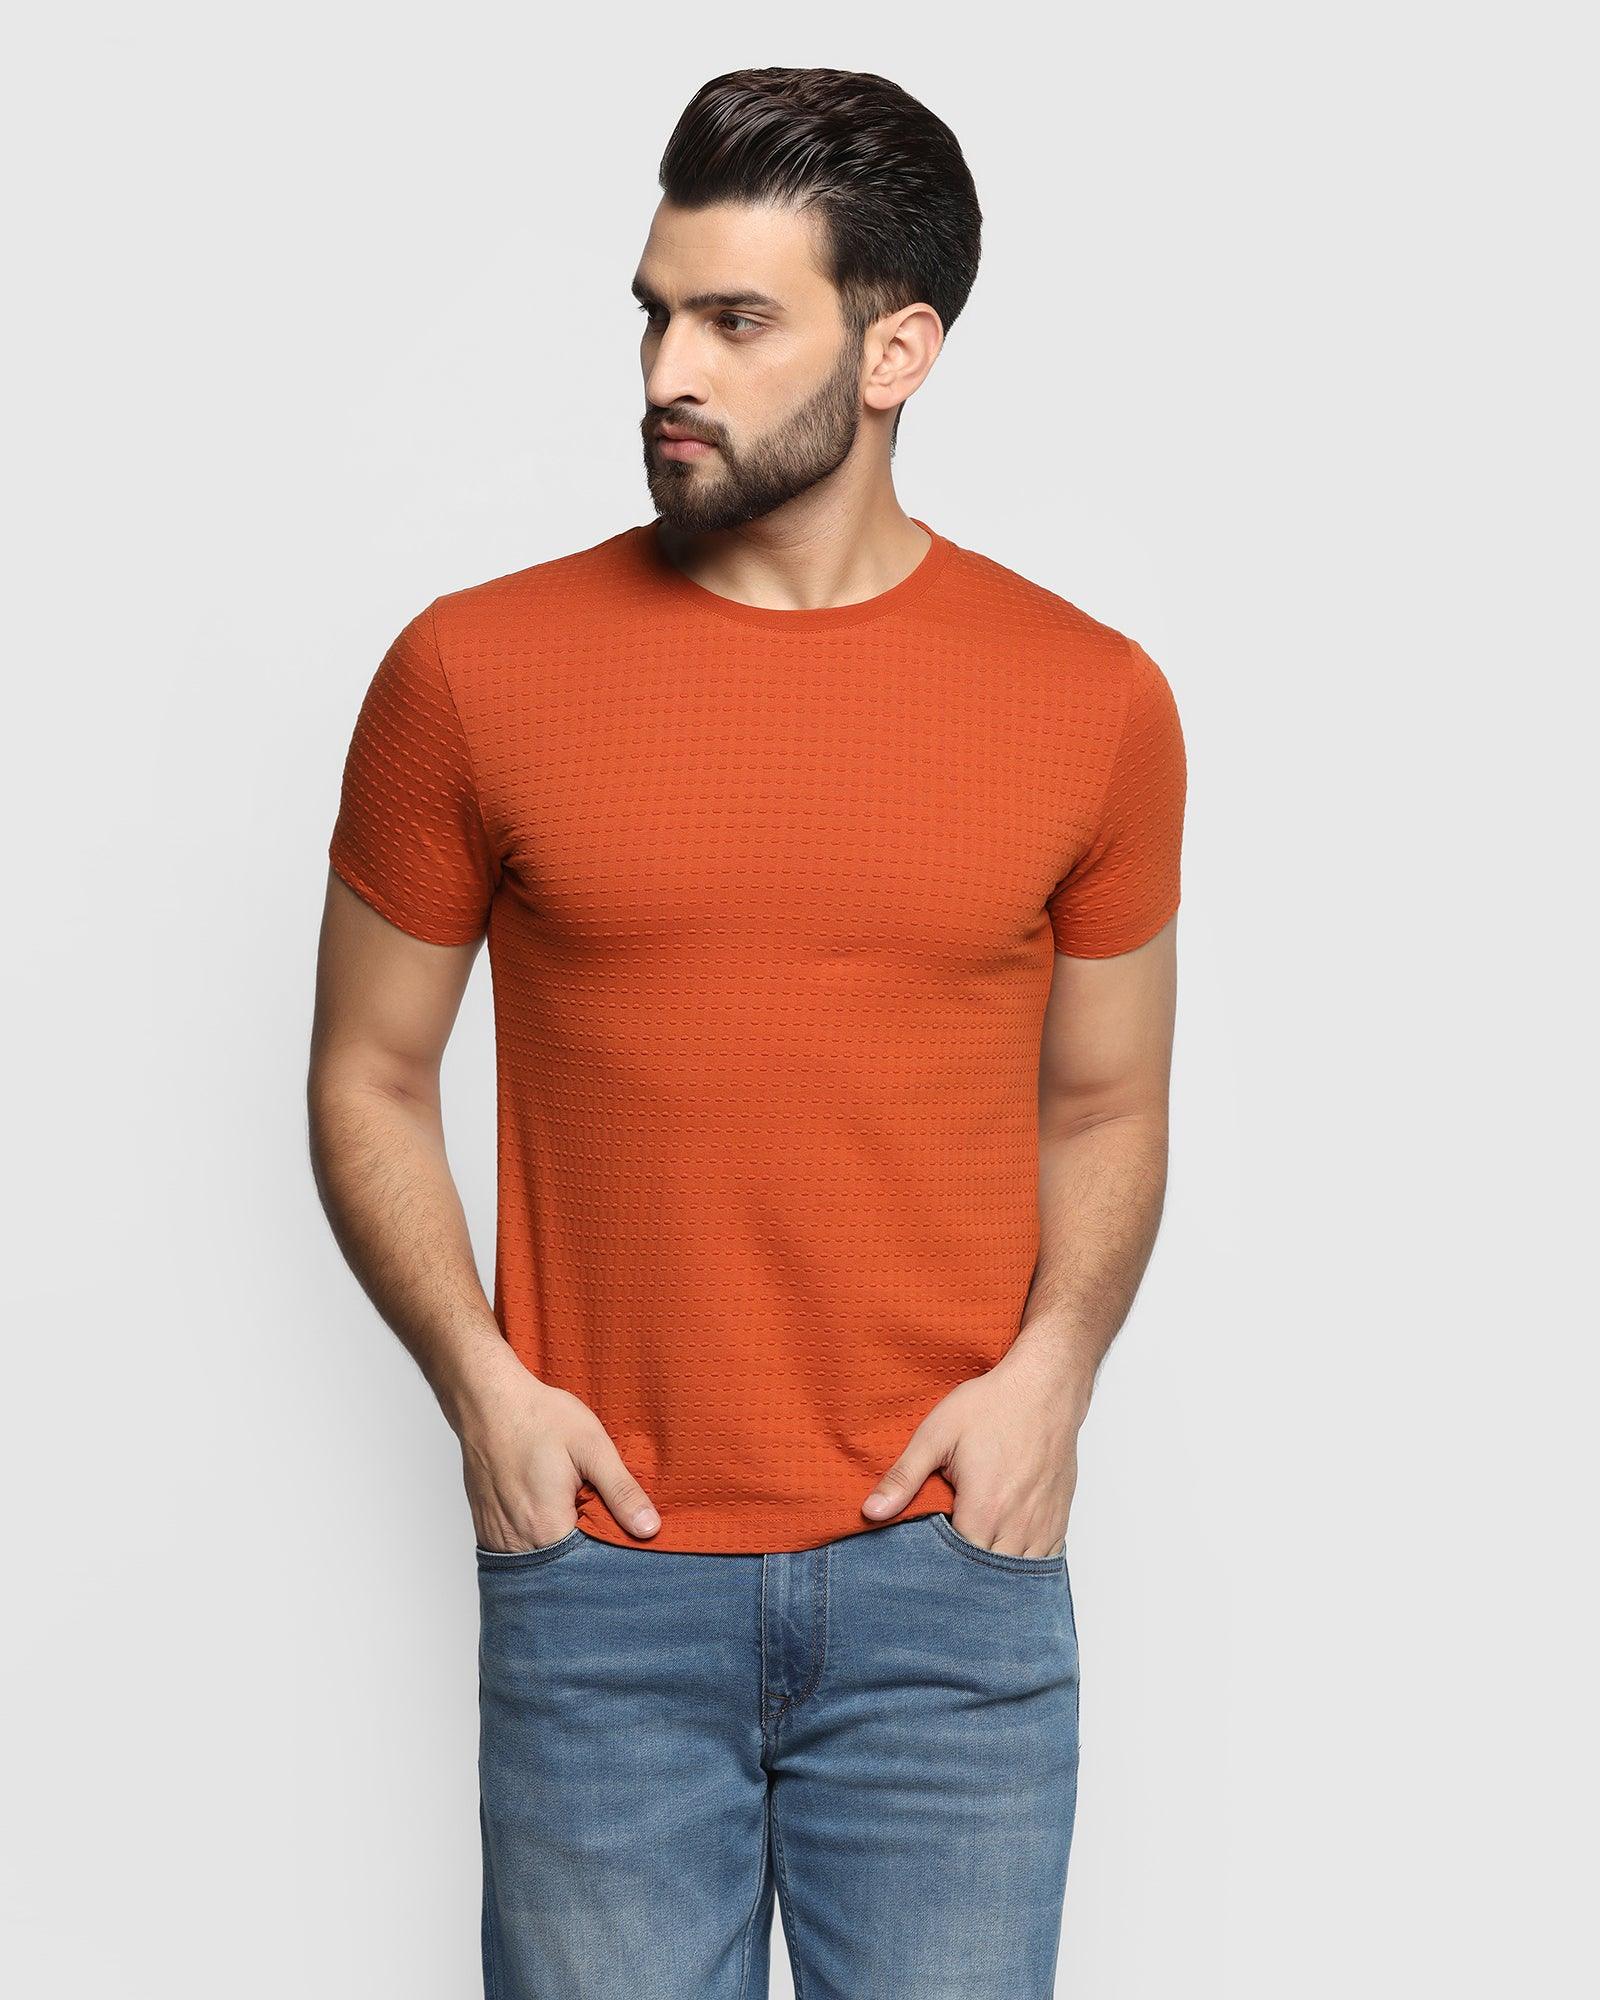 Crew Neck Rust Orange Textured T Shirt - Sheath